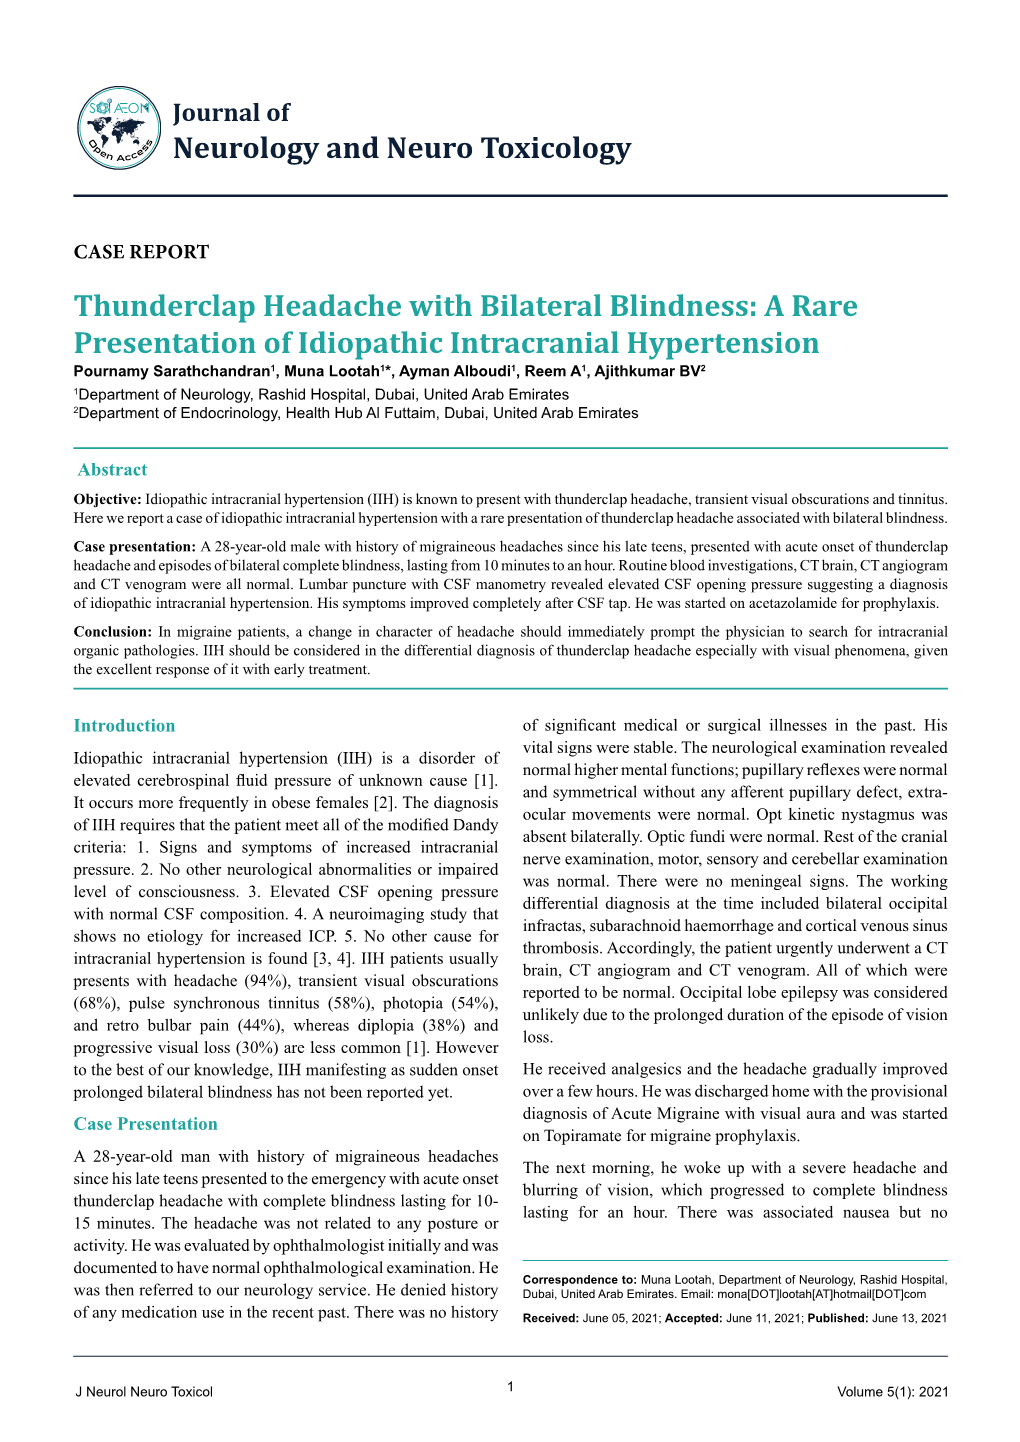 Thunderclap Headache with Bilateral Blindness: a Rare Presentation Of